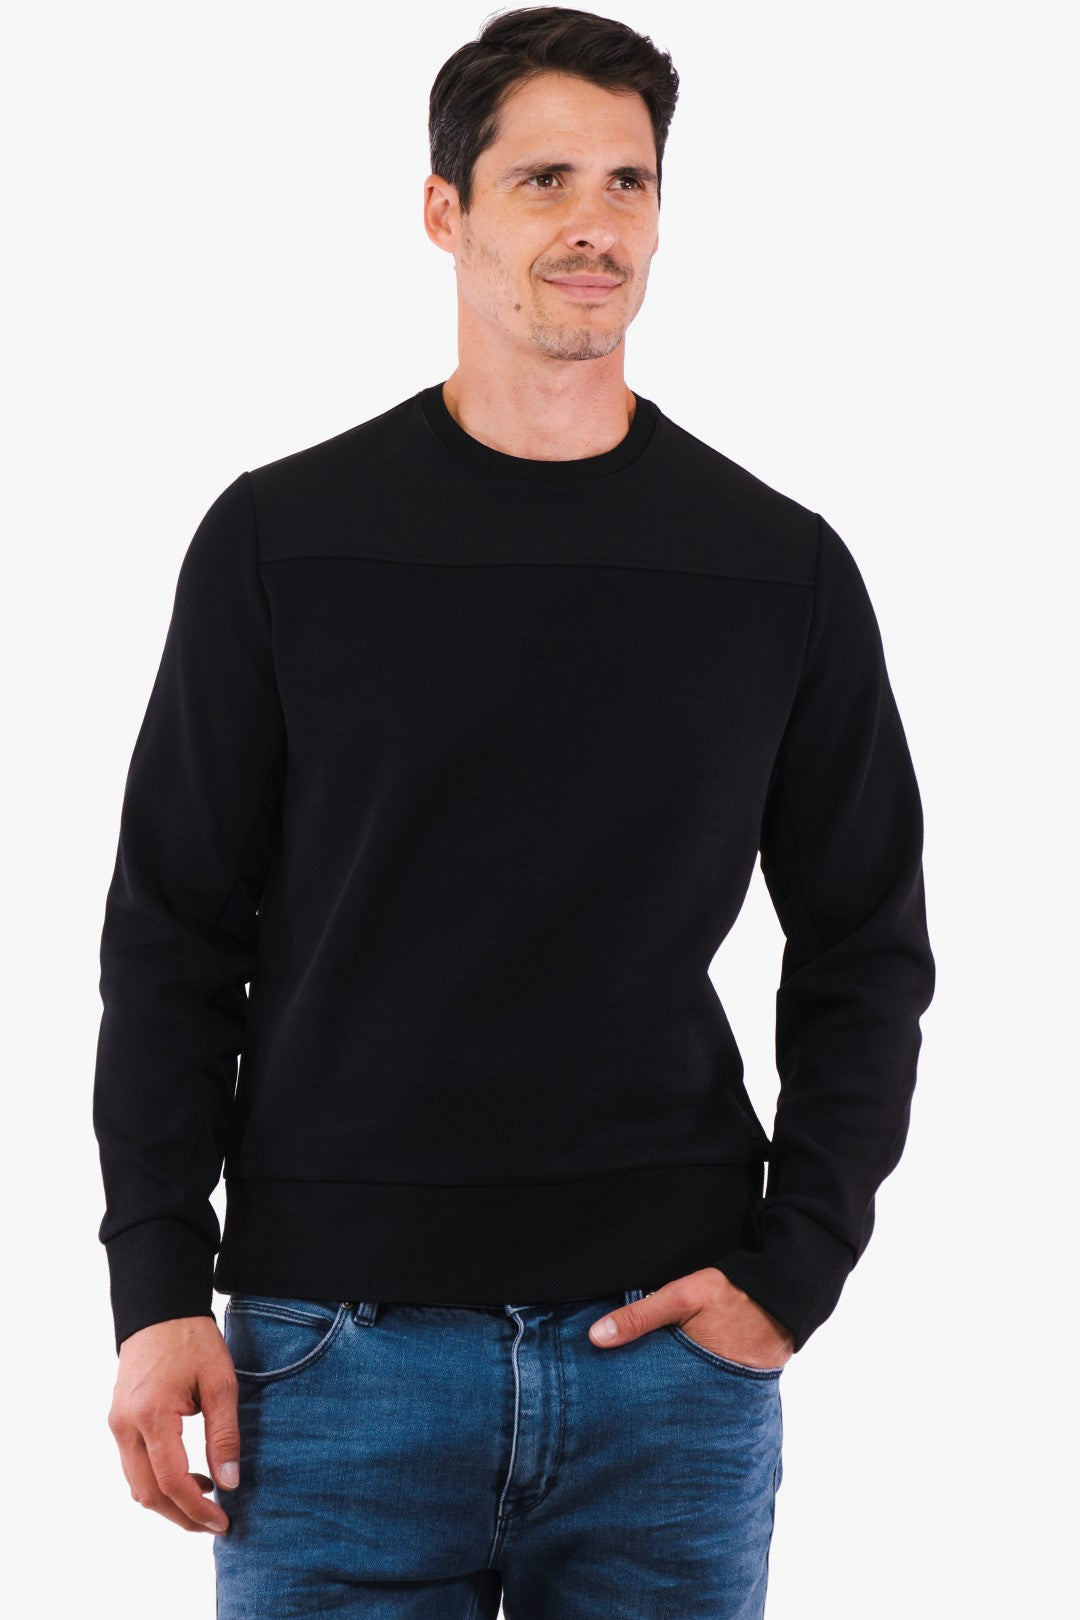 Black Michael Kors sweater